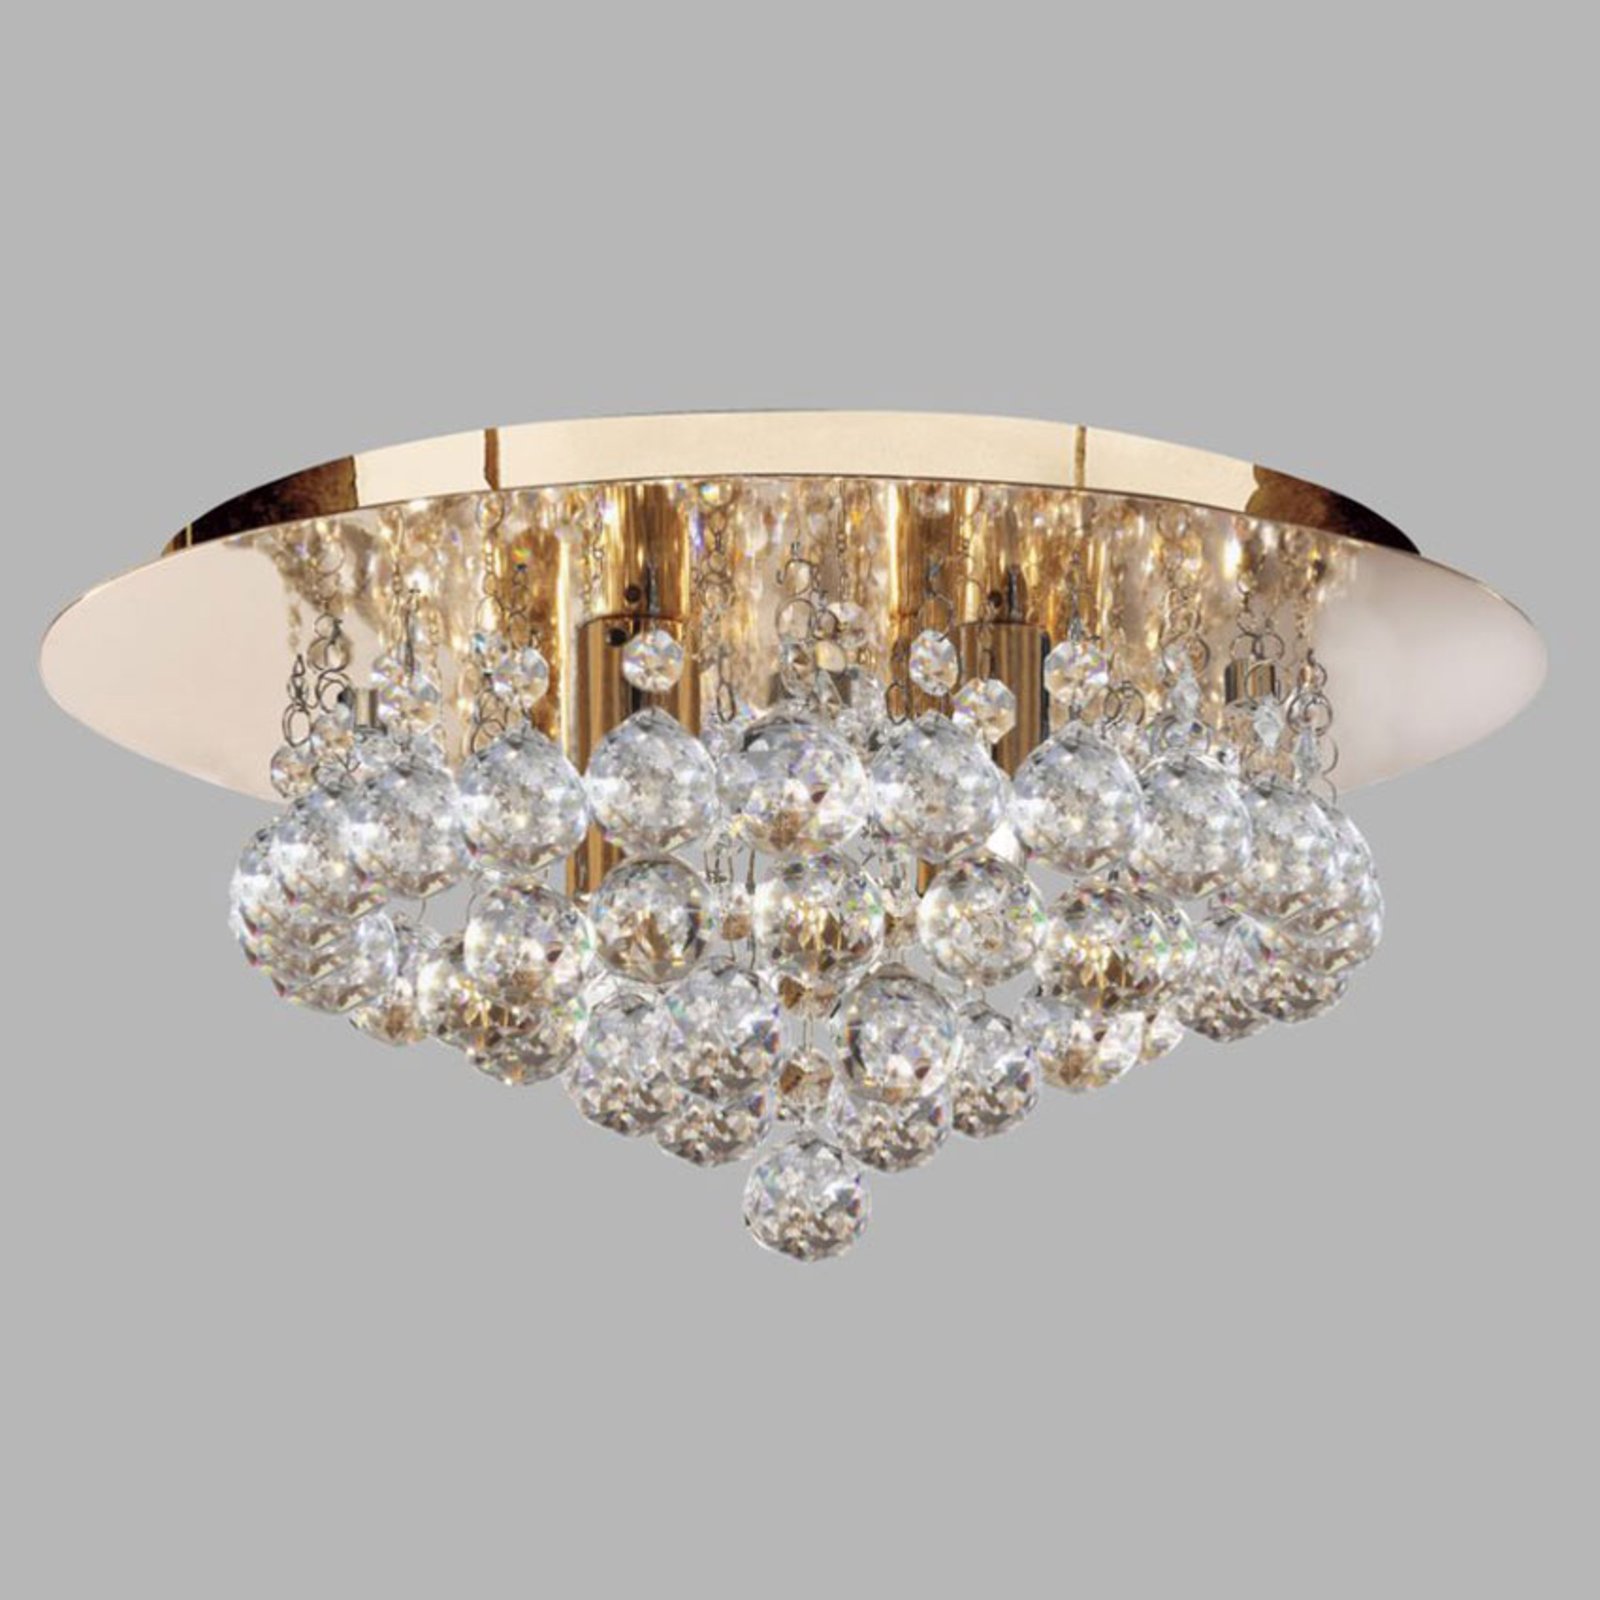 Hanna plafondlamp met kristallen bollen, 35 cm goud